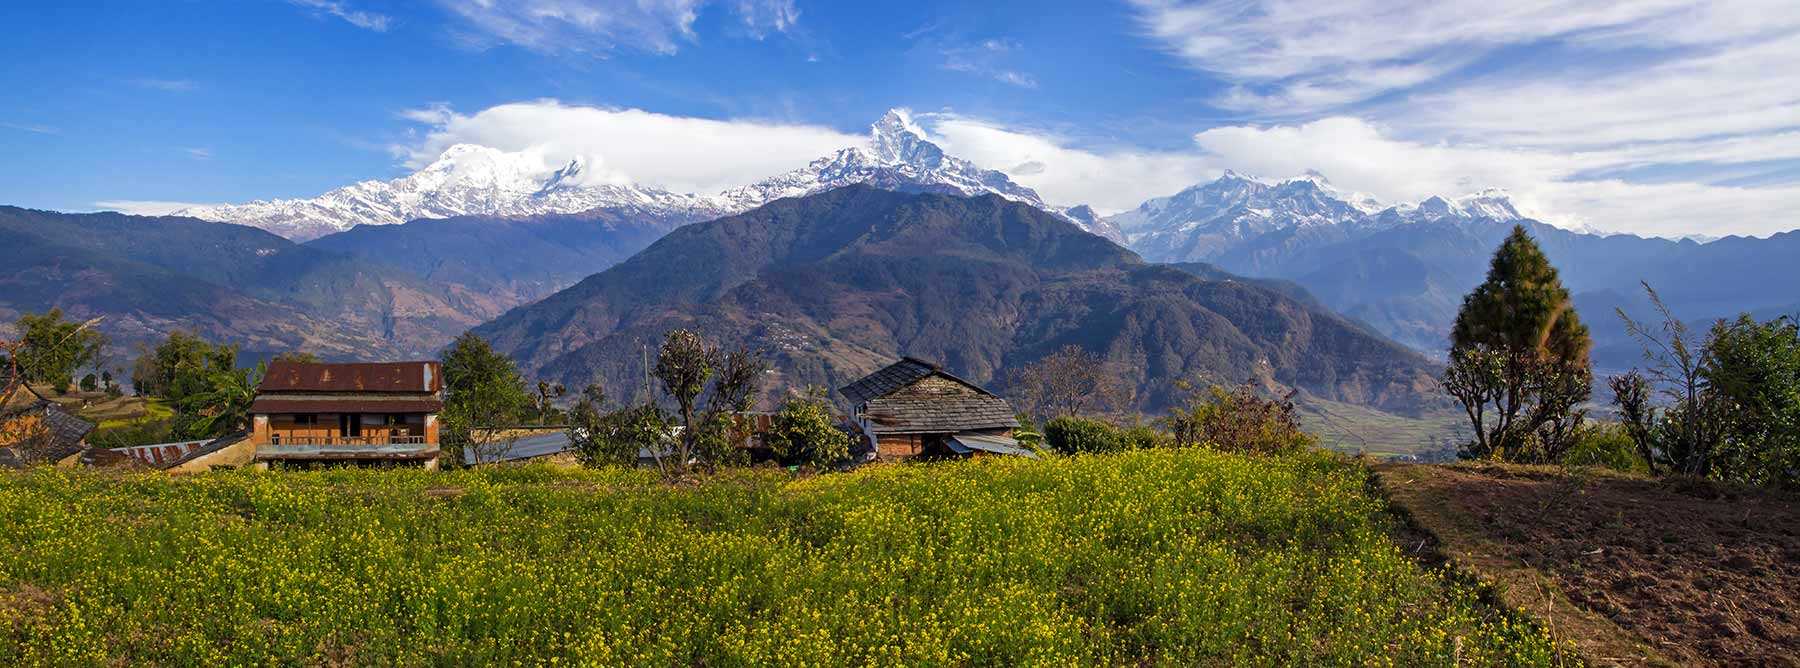 Nepal Village Home Stay Tour | Himalayan Trekkers